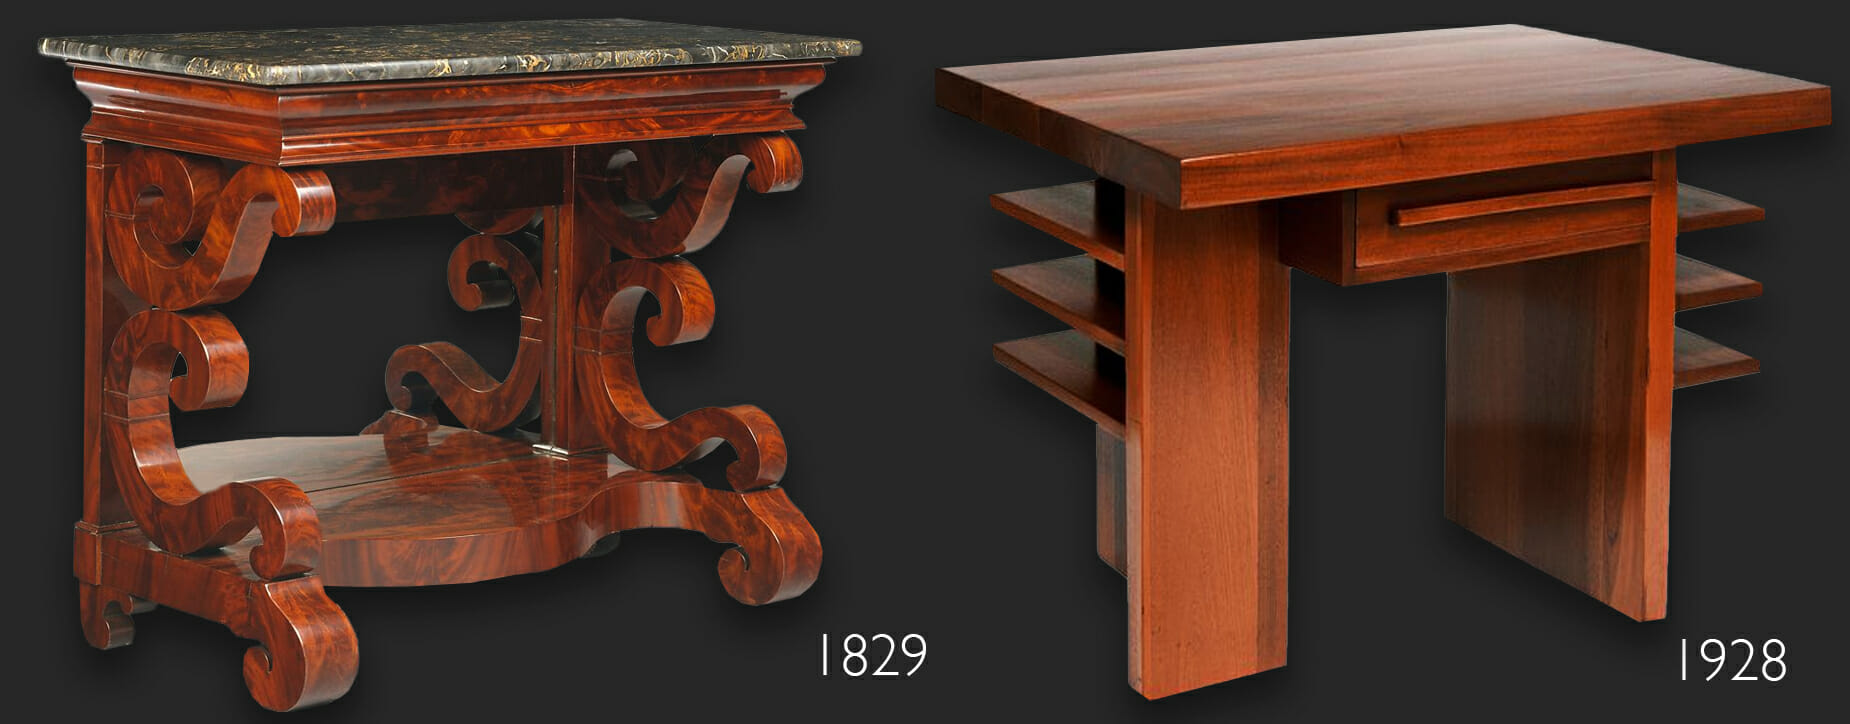 19th century 20th century tables